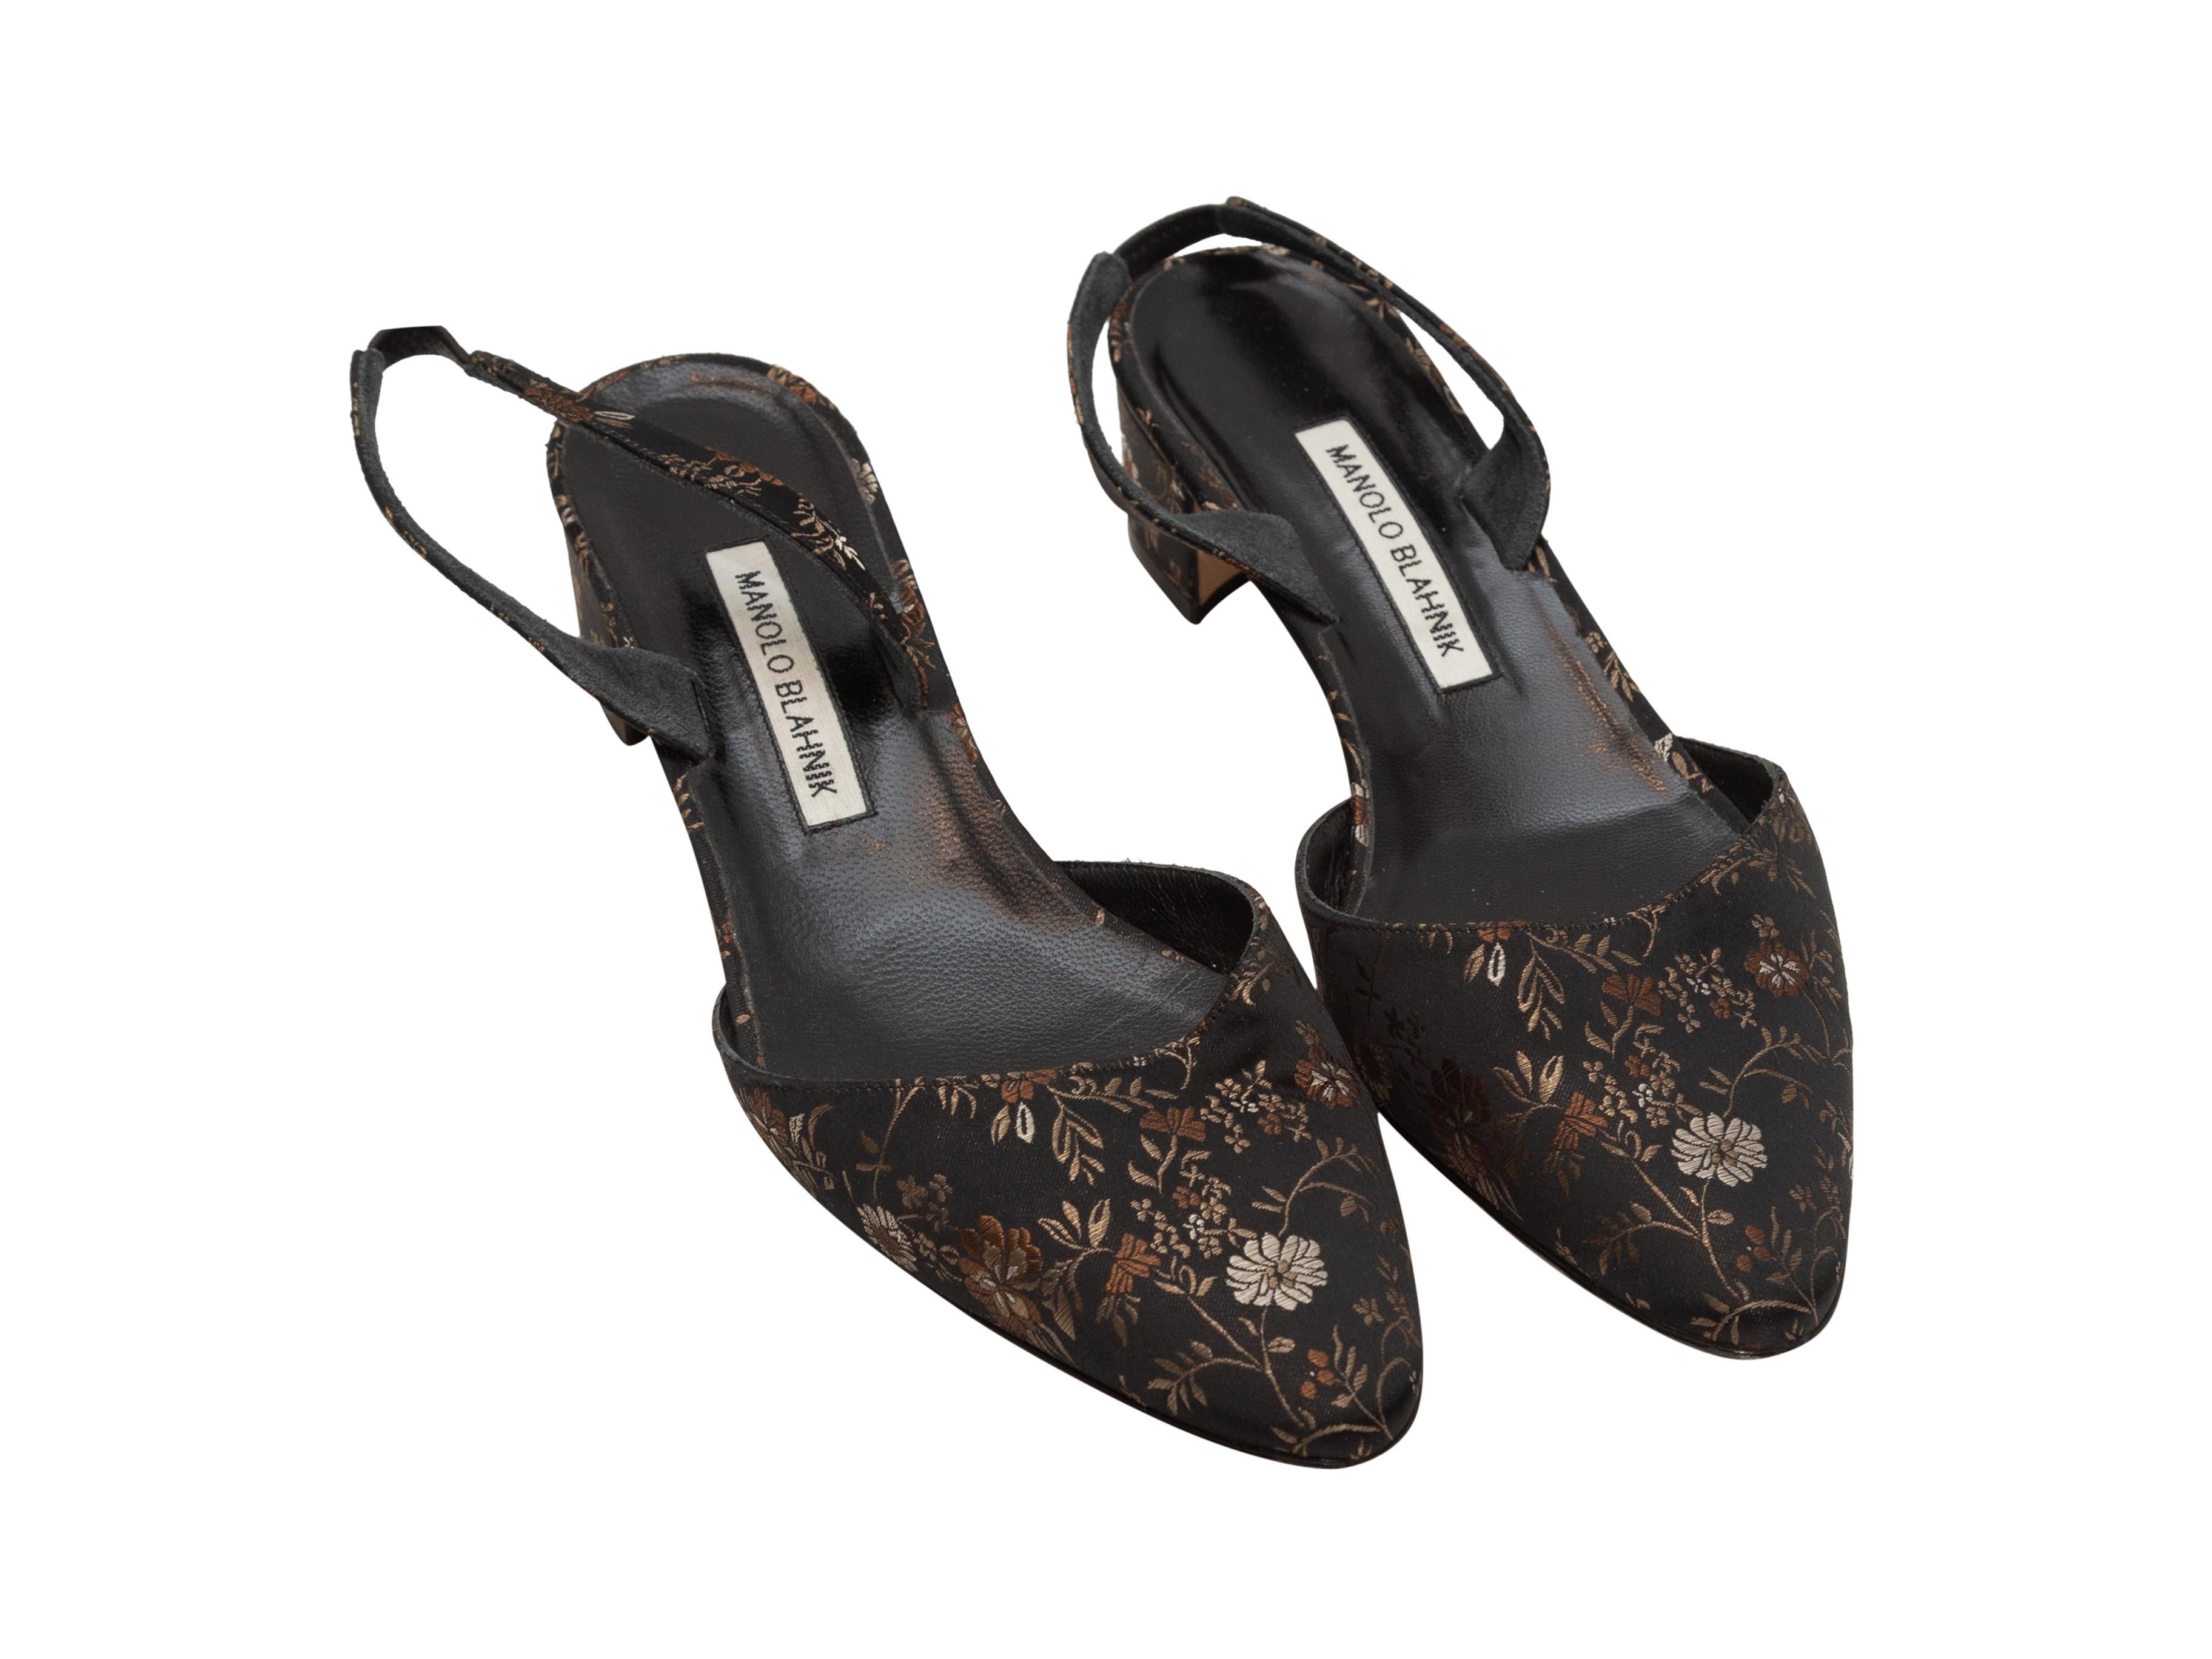 Product details: Black, brown, and tan jacquard slingback heels by Manolo Blahnik. Floral pattern throughout. Block heels. Designer size 40. 1.5